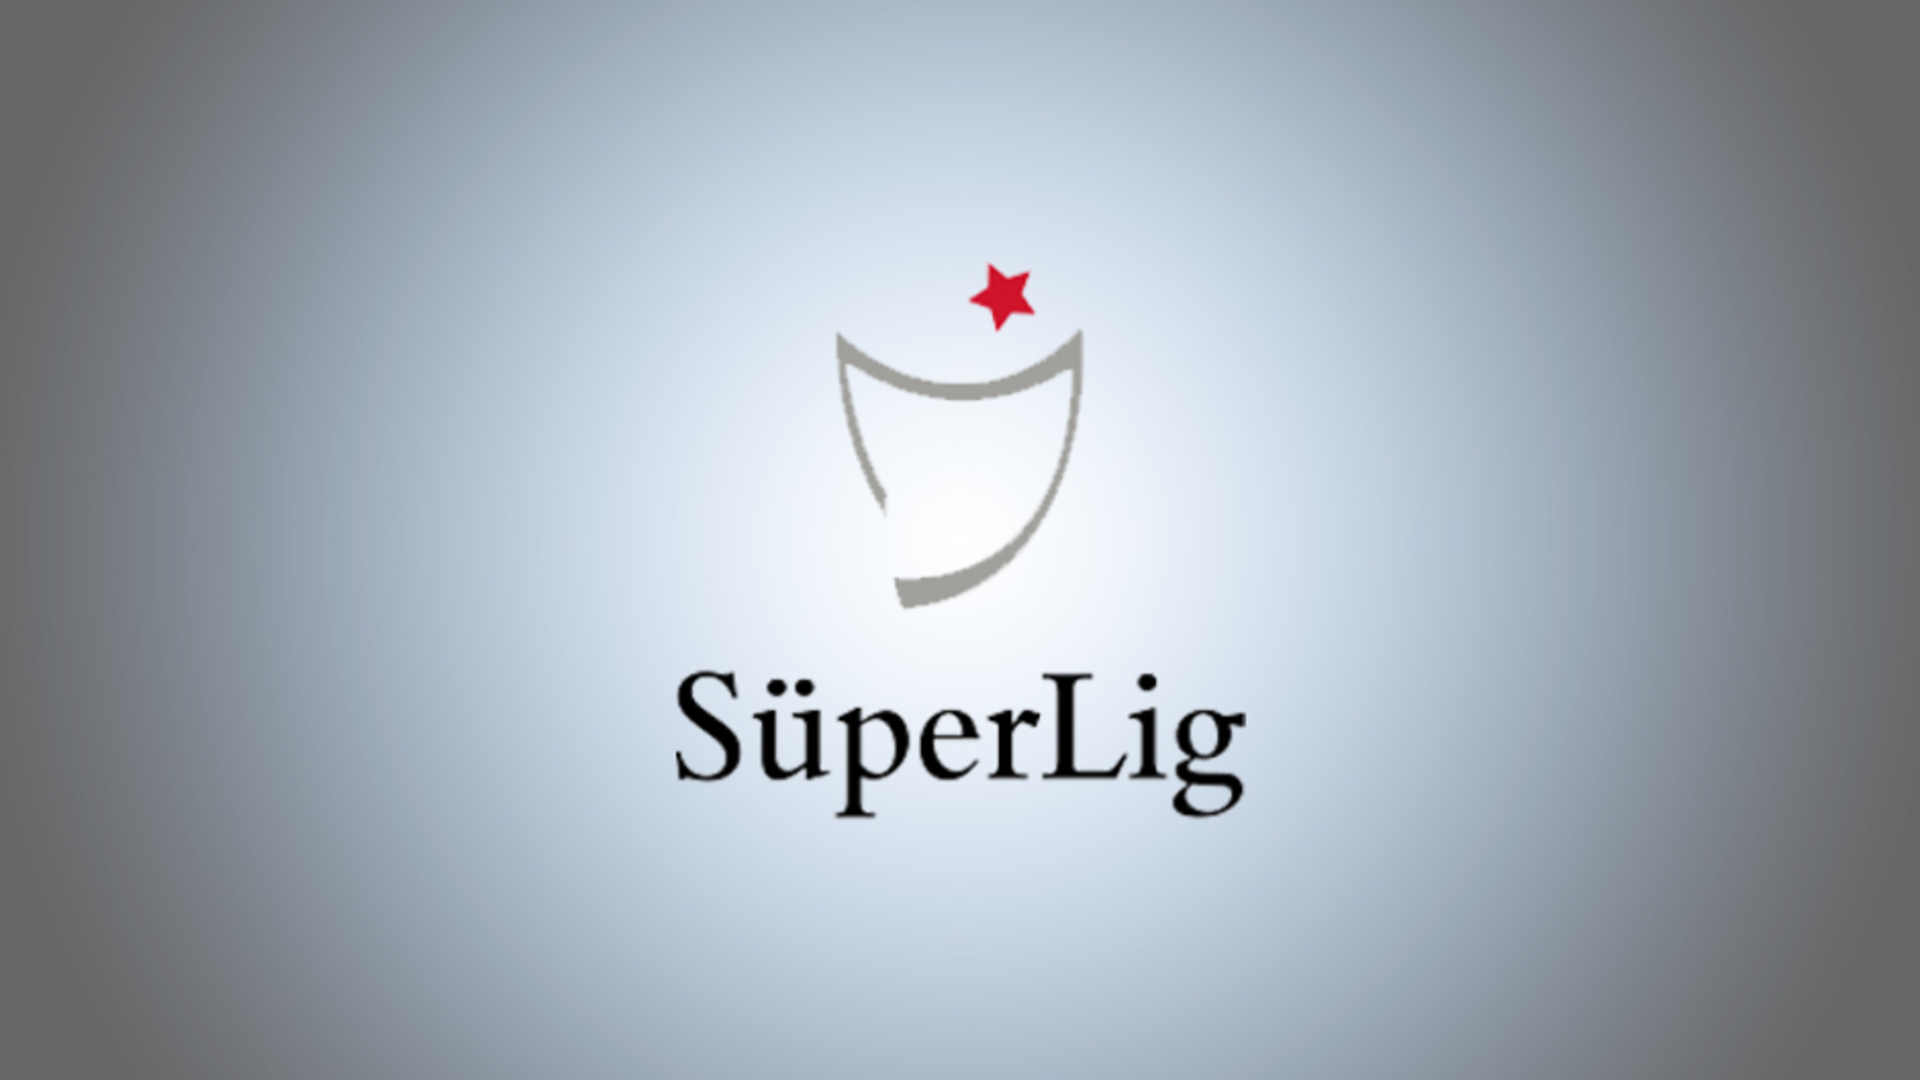 Spor toto süper lig. Super Lig. Lig. Чемпионат Турции по футболу логотип. Spor Toto super Lig logo.